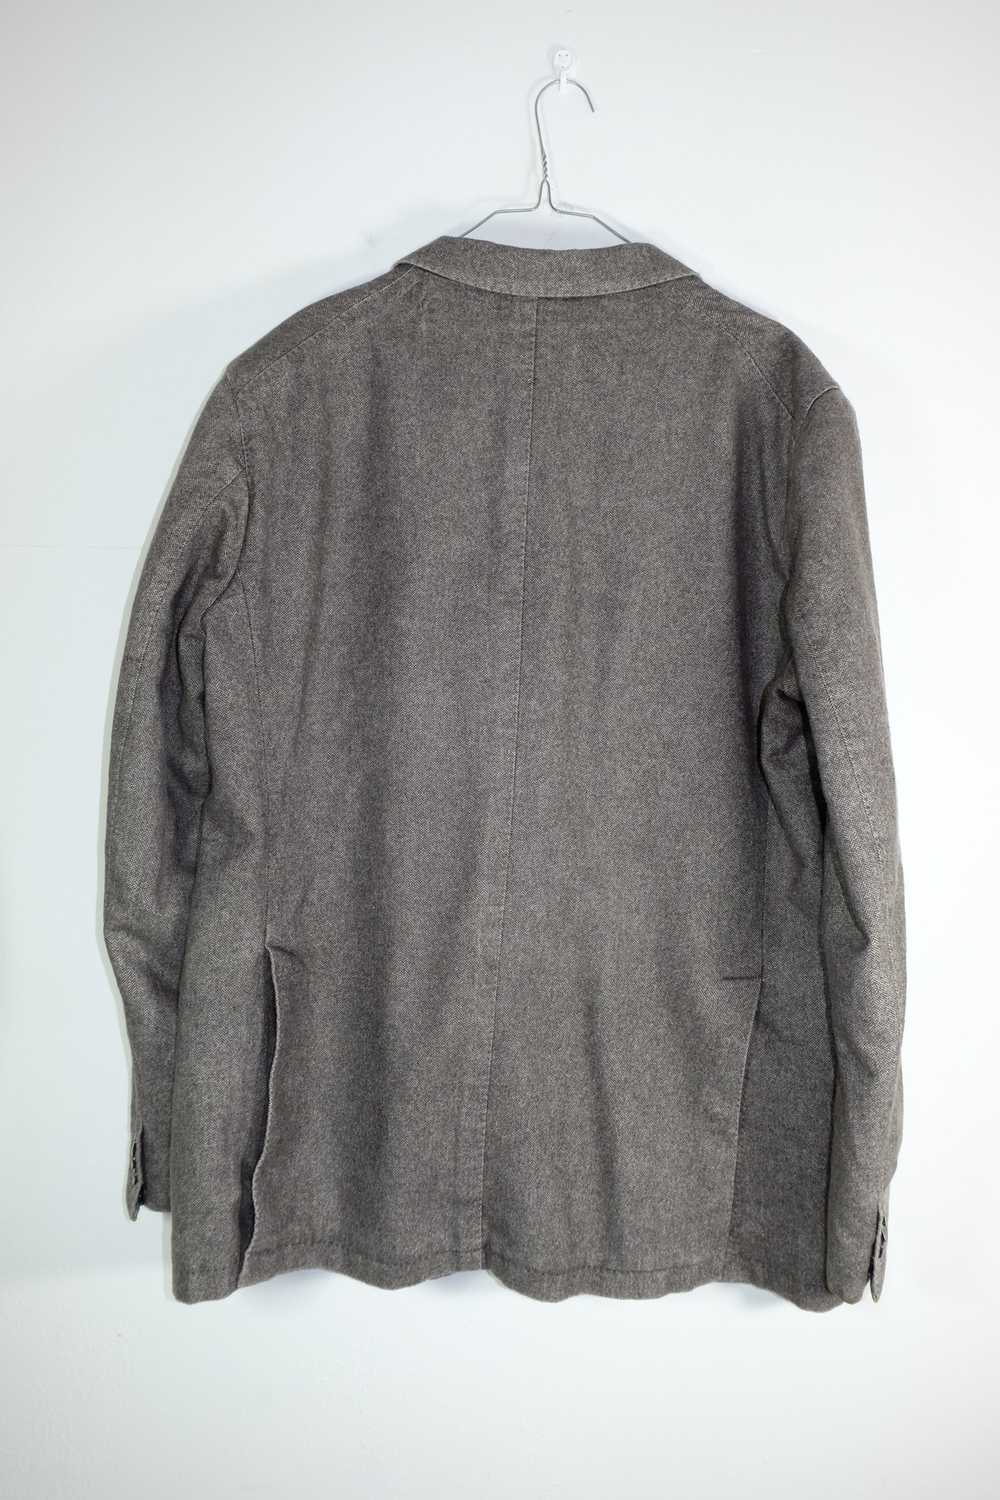 Tagliatore Wool And Cotton Brown Blazer Jacket - image 2